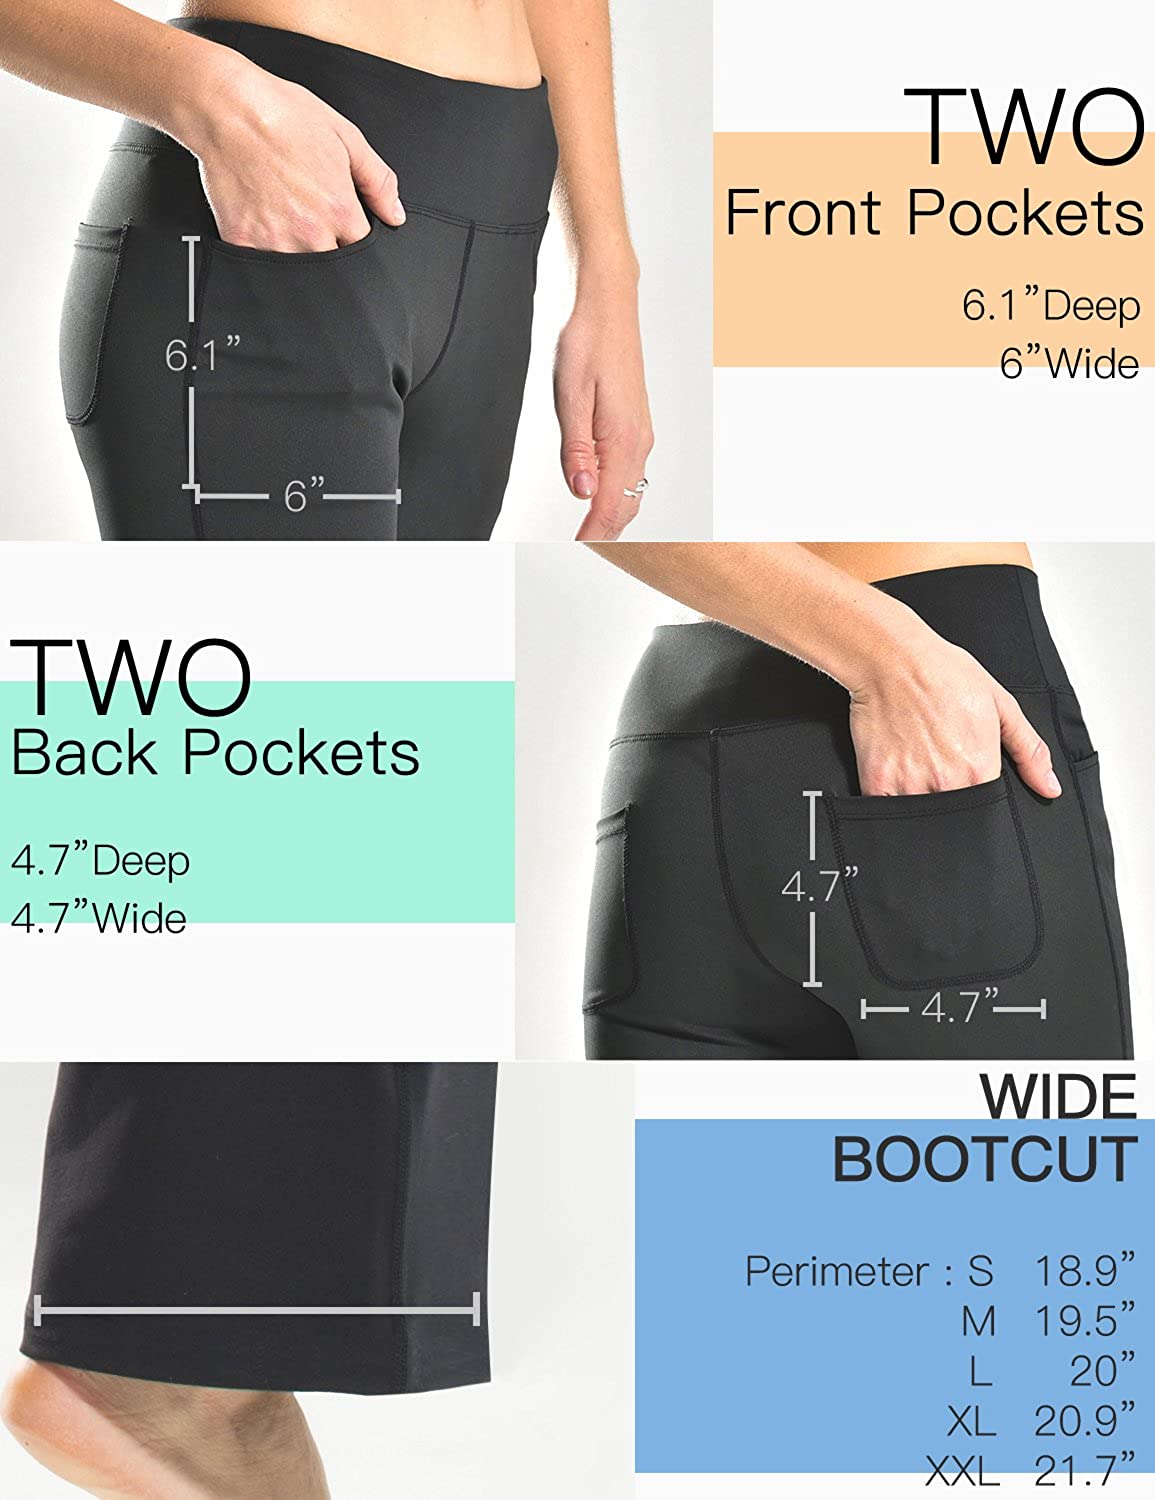 Safort 28 30 32 34 Inseam Regular Tall Bootcut Yoga Pants, 4 Pockets,  UPF50+